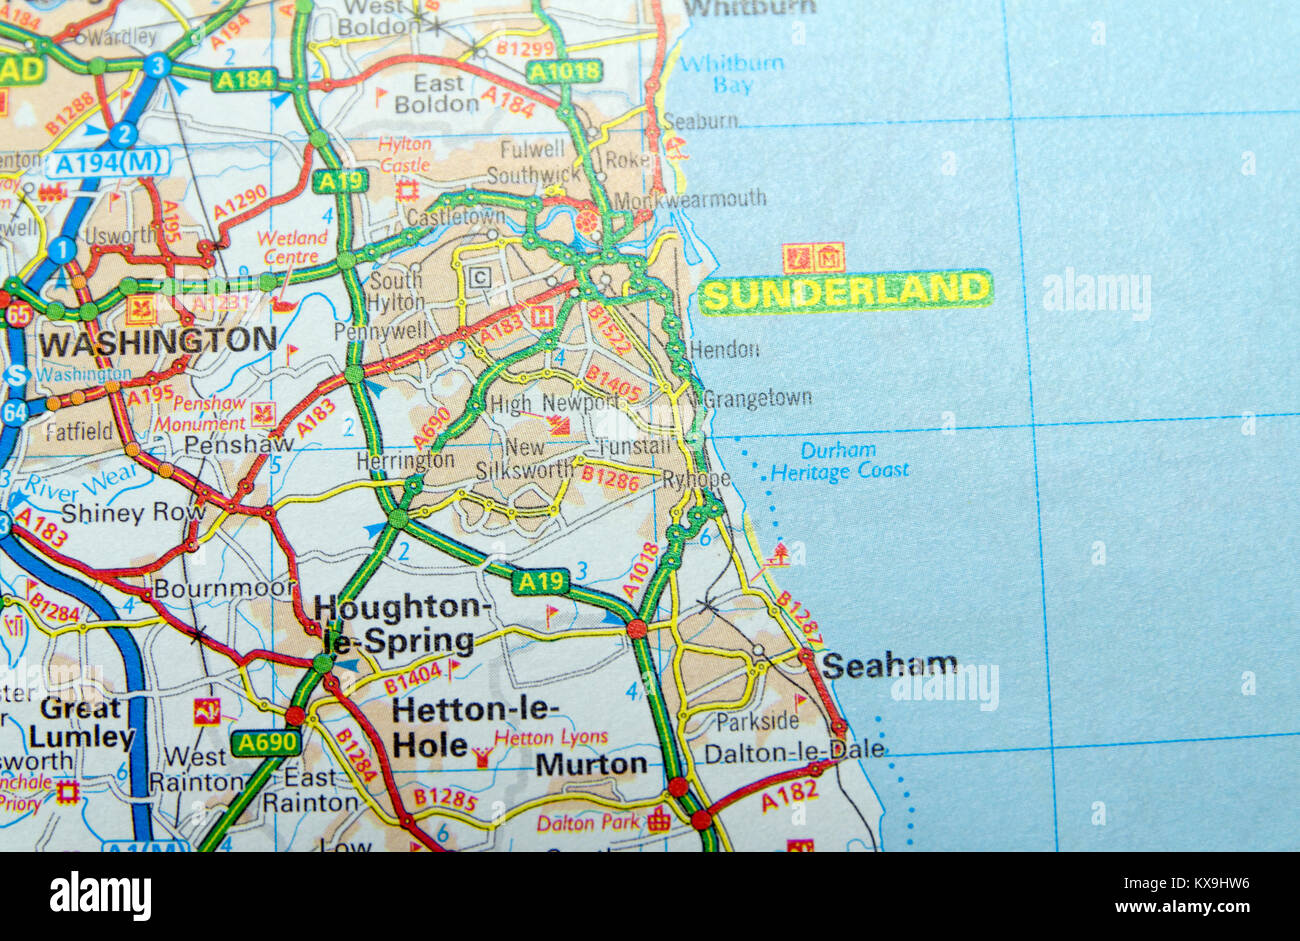 Road Map of Sunderland, England. Stock Photo